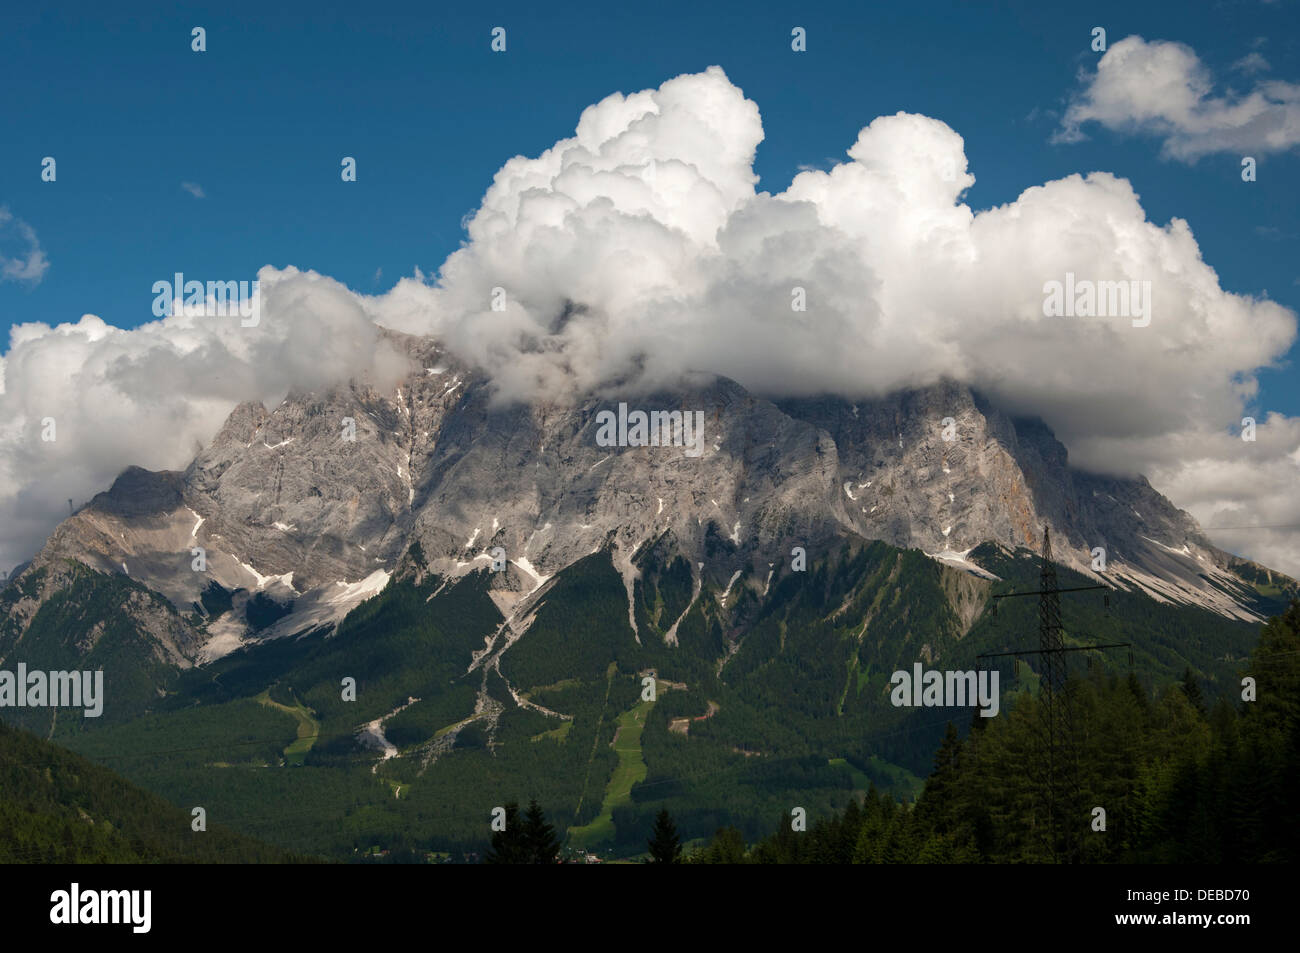 Cumulus clouds looming over a mountain ridge, Ehrwald, Tyrol, Austria Stock Photo